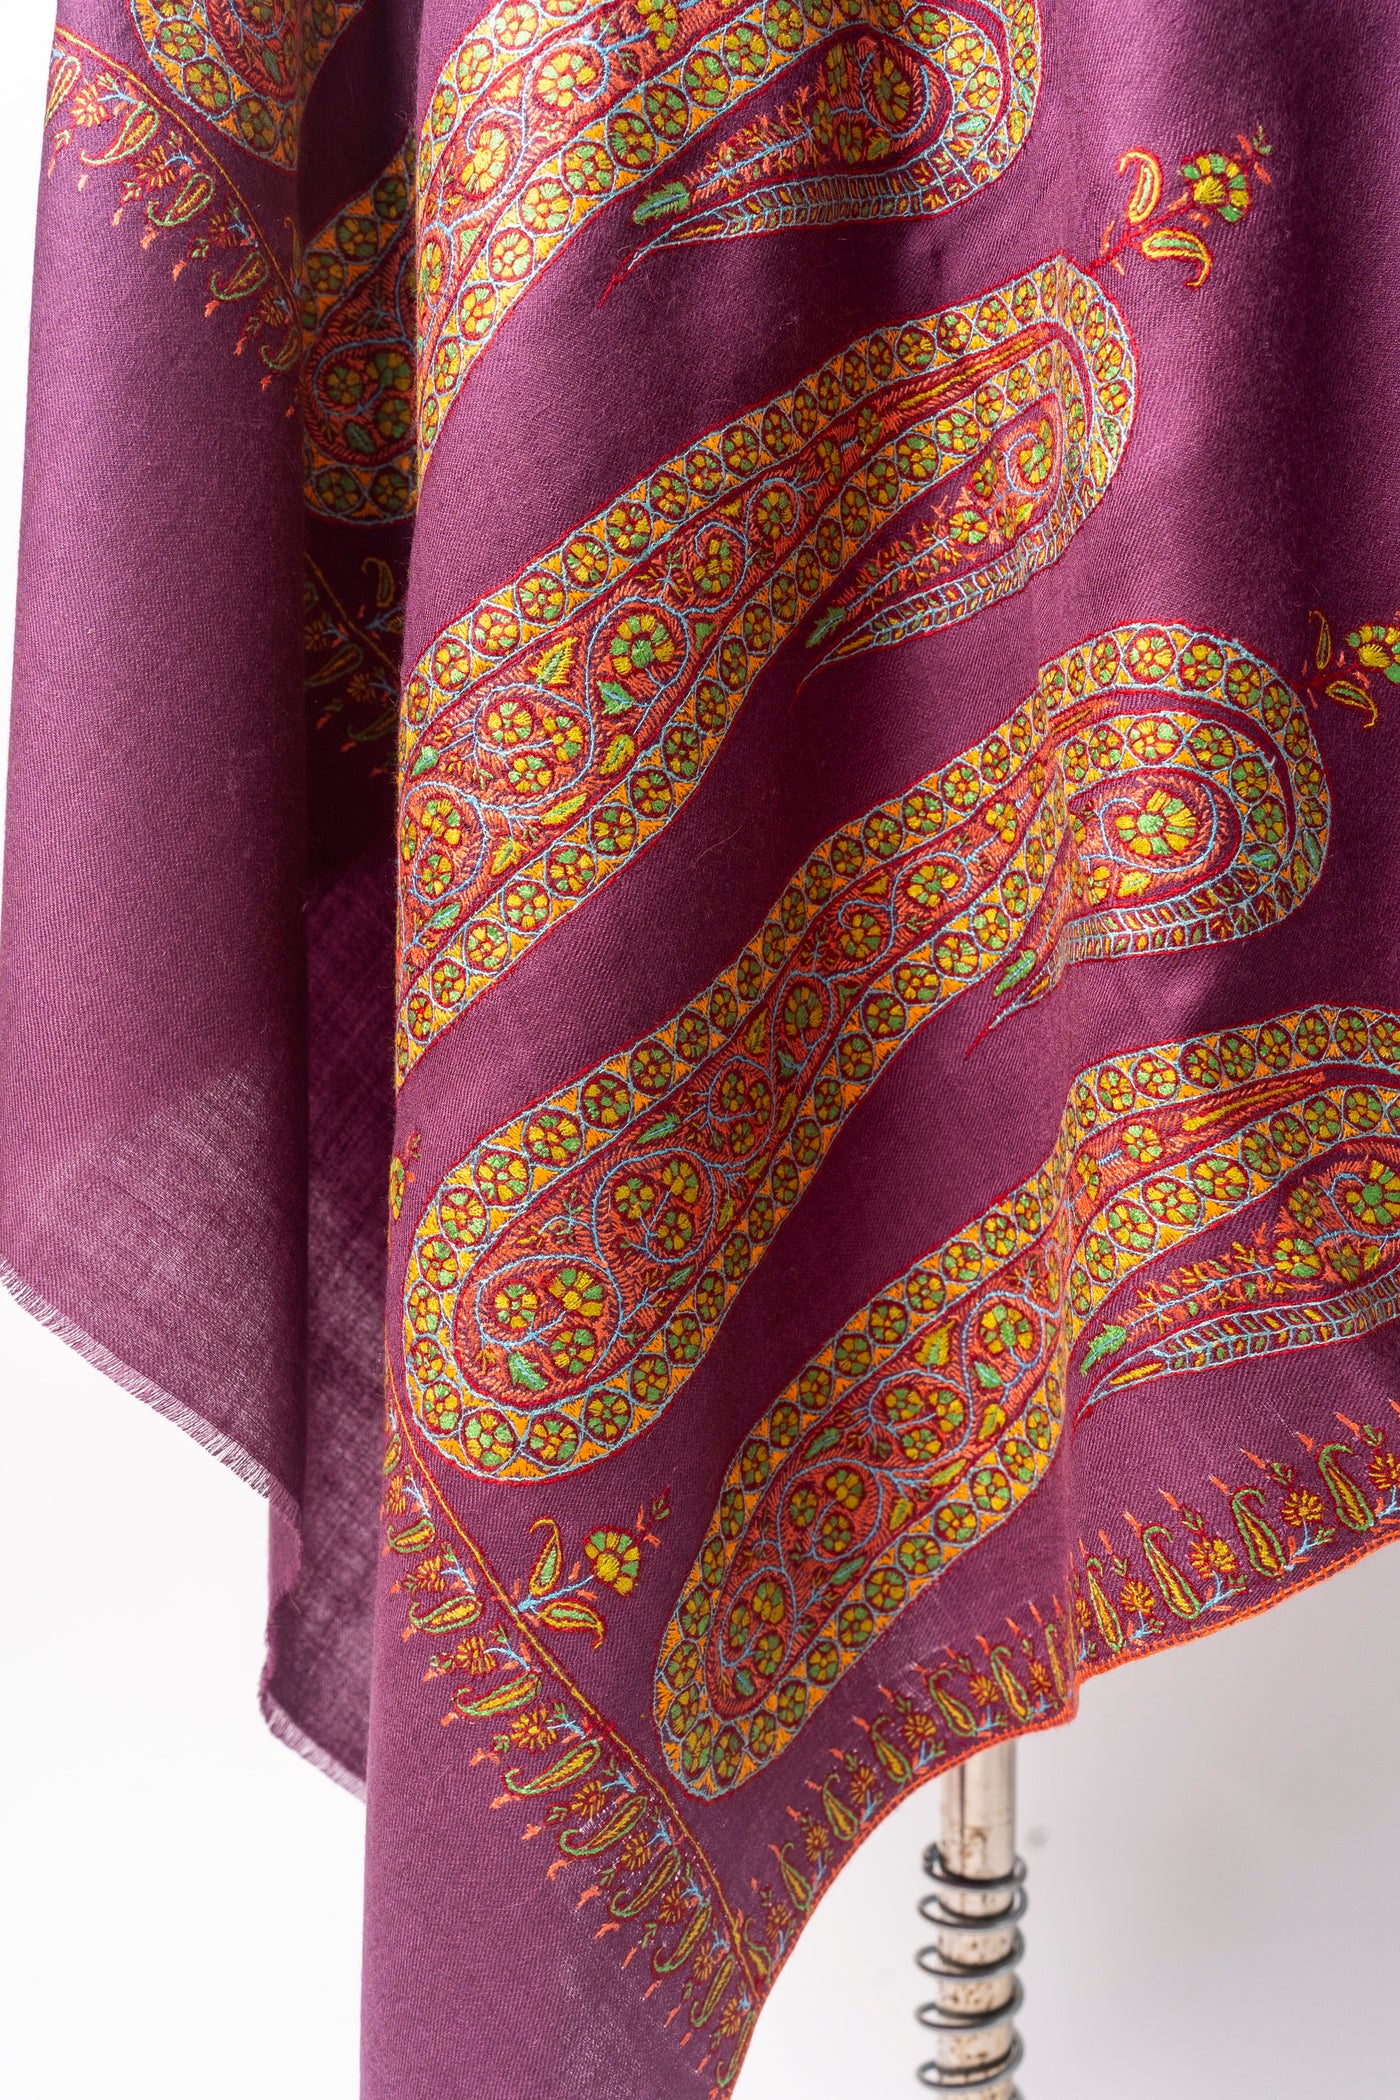 Royal Radiance Sozni Pashmina – Hand Embroidered Majestic Shawl